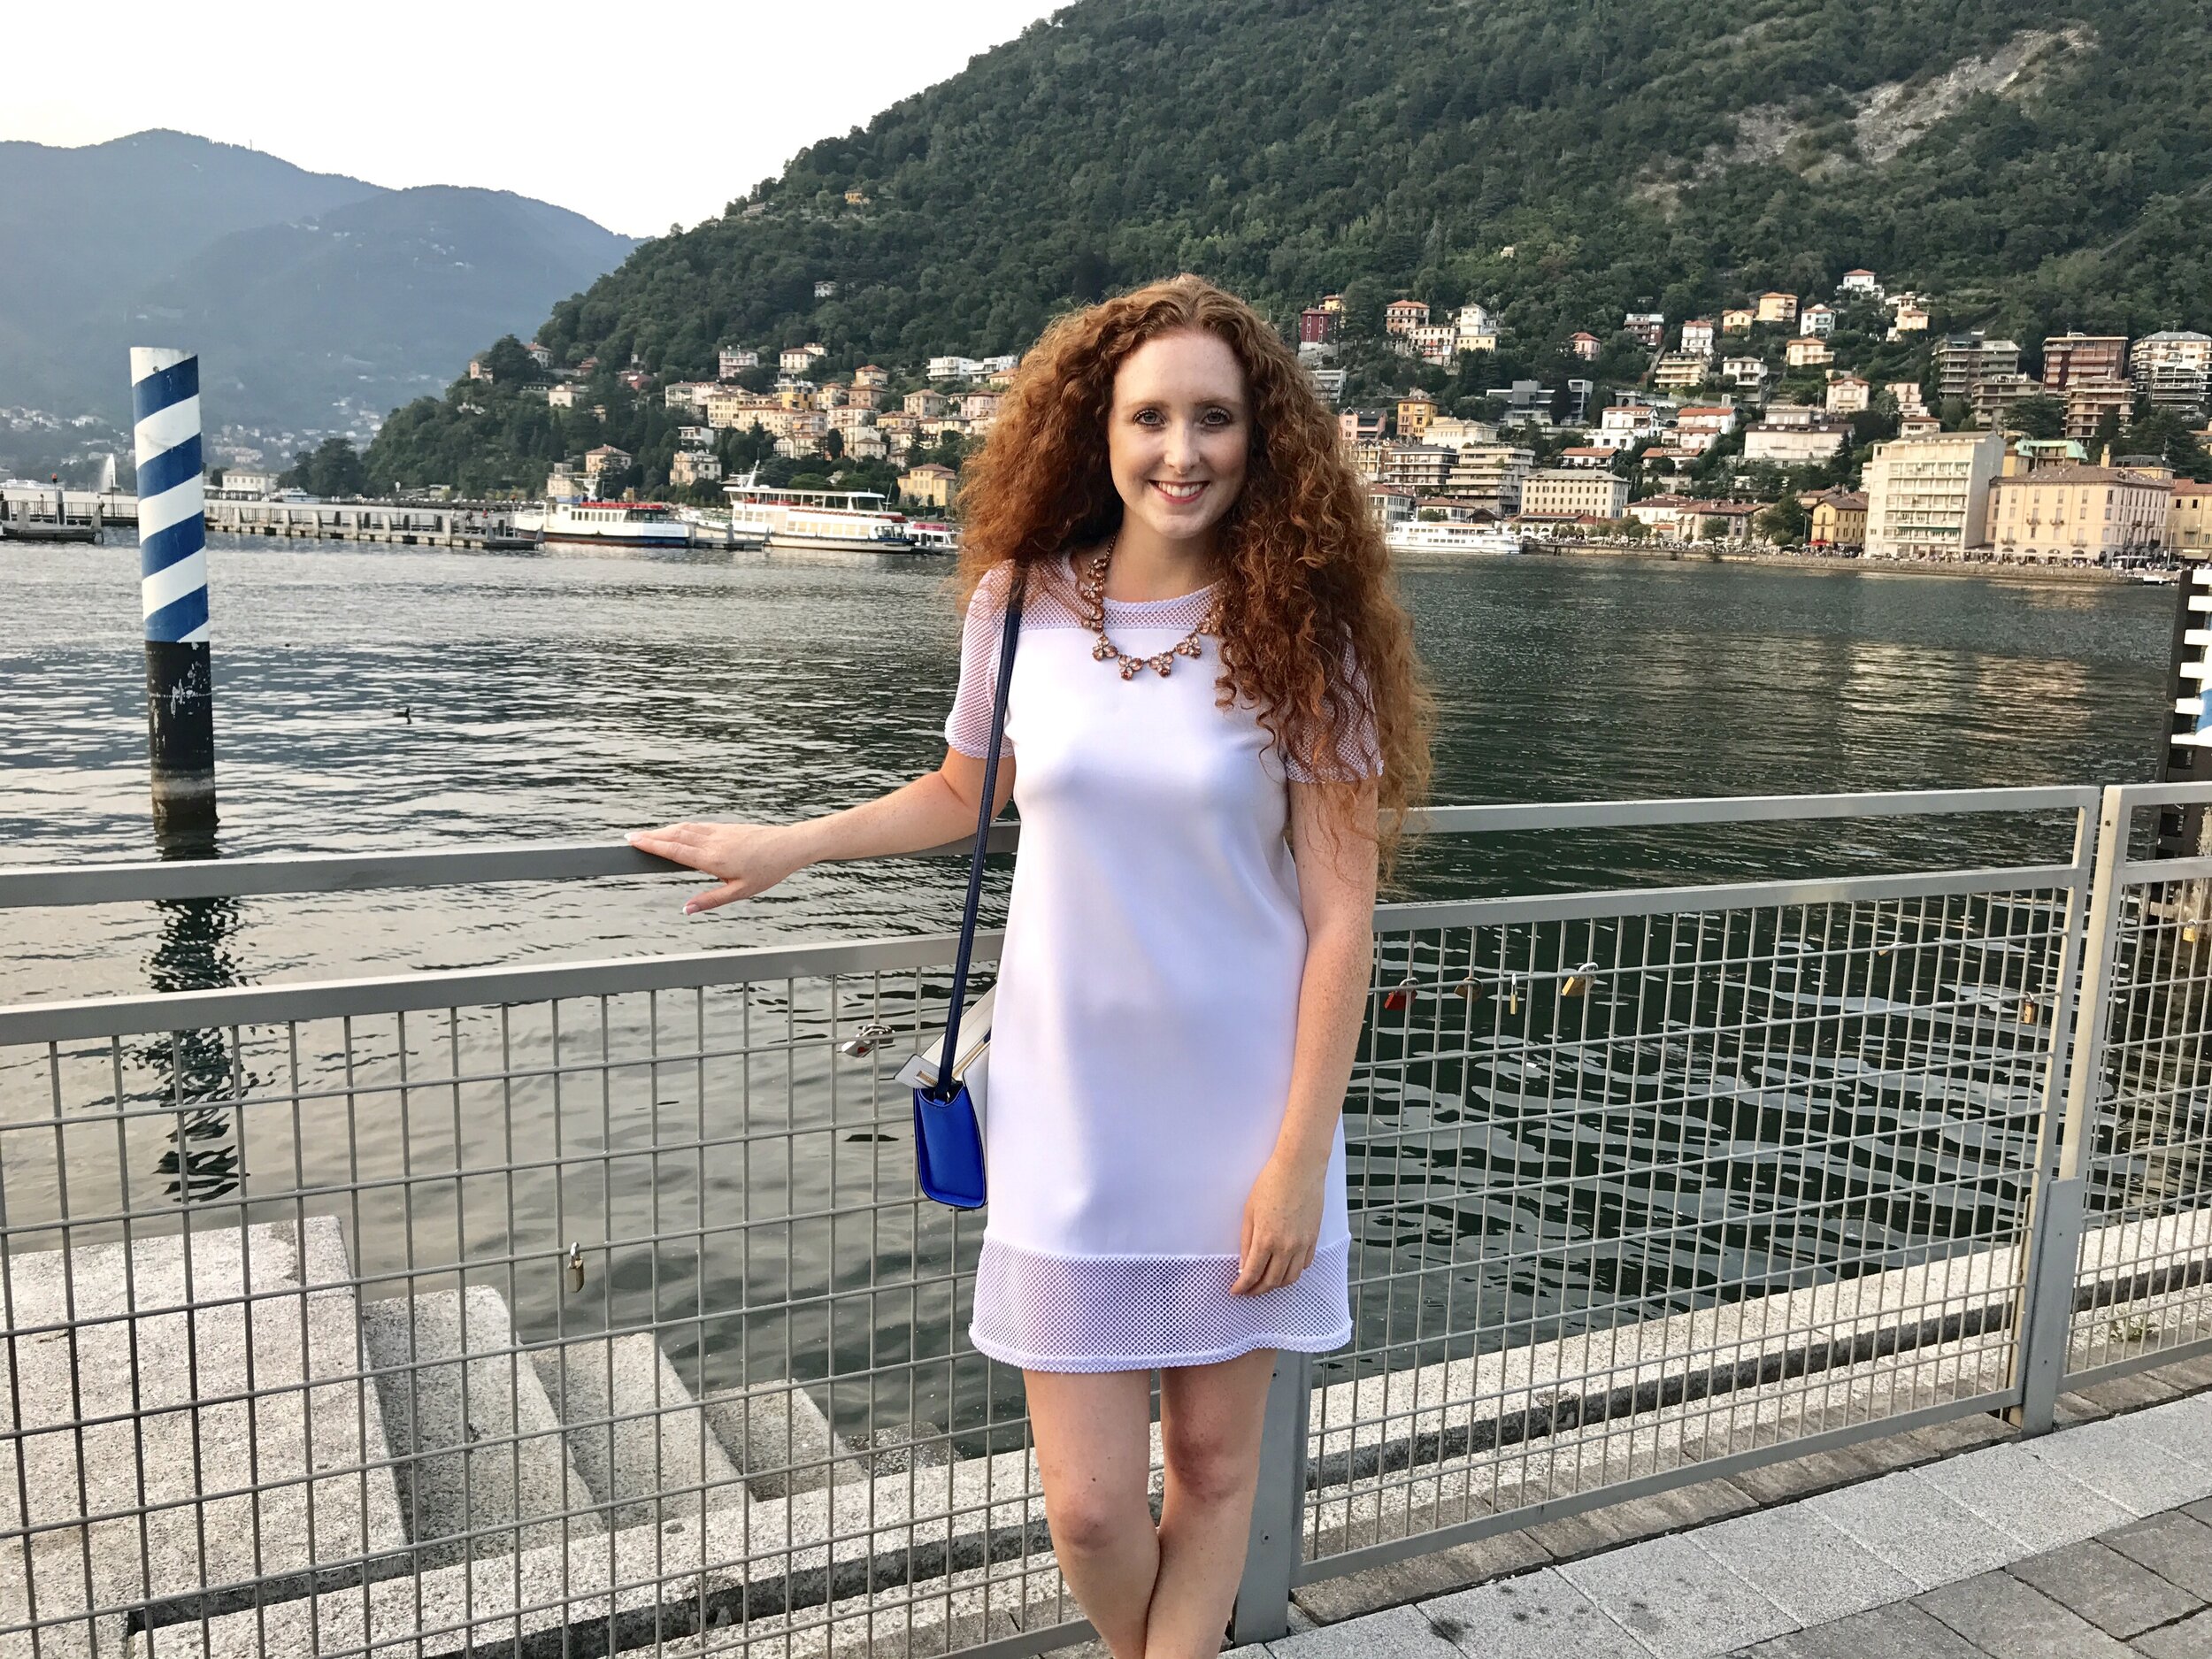 Lake Como Travel Guide: Along the water front at Como